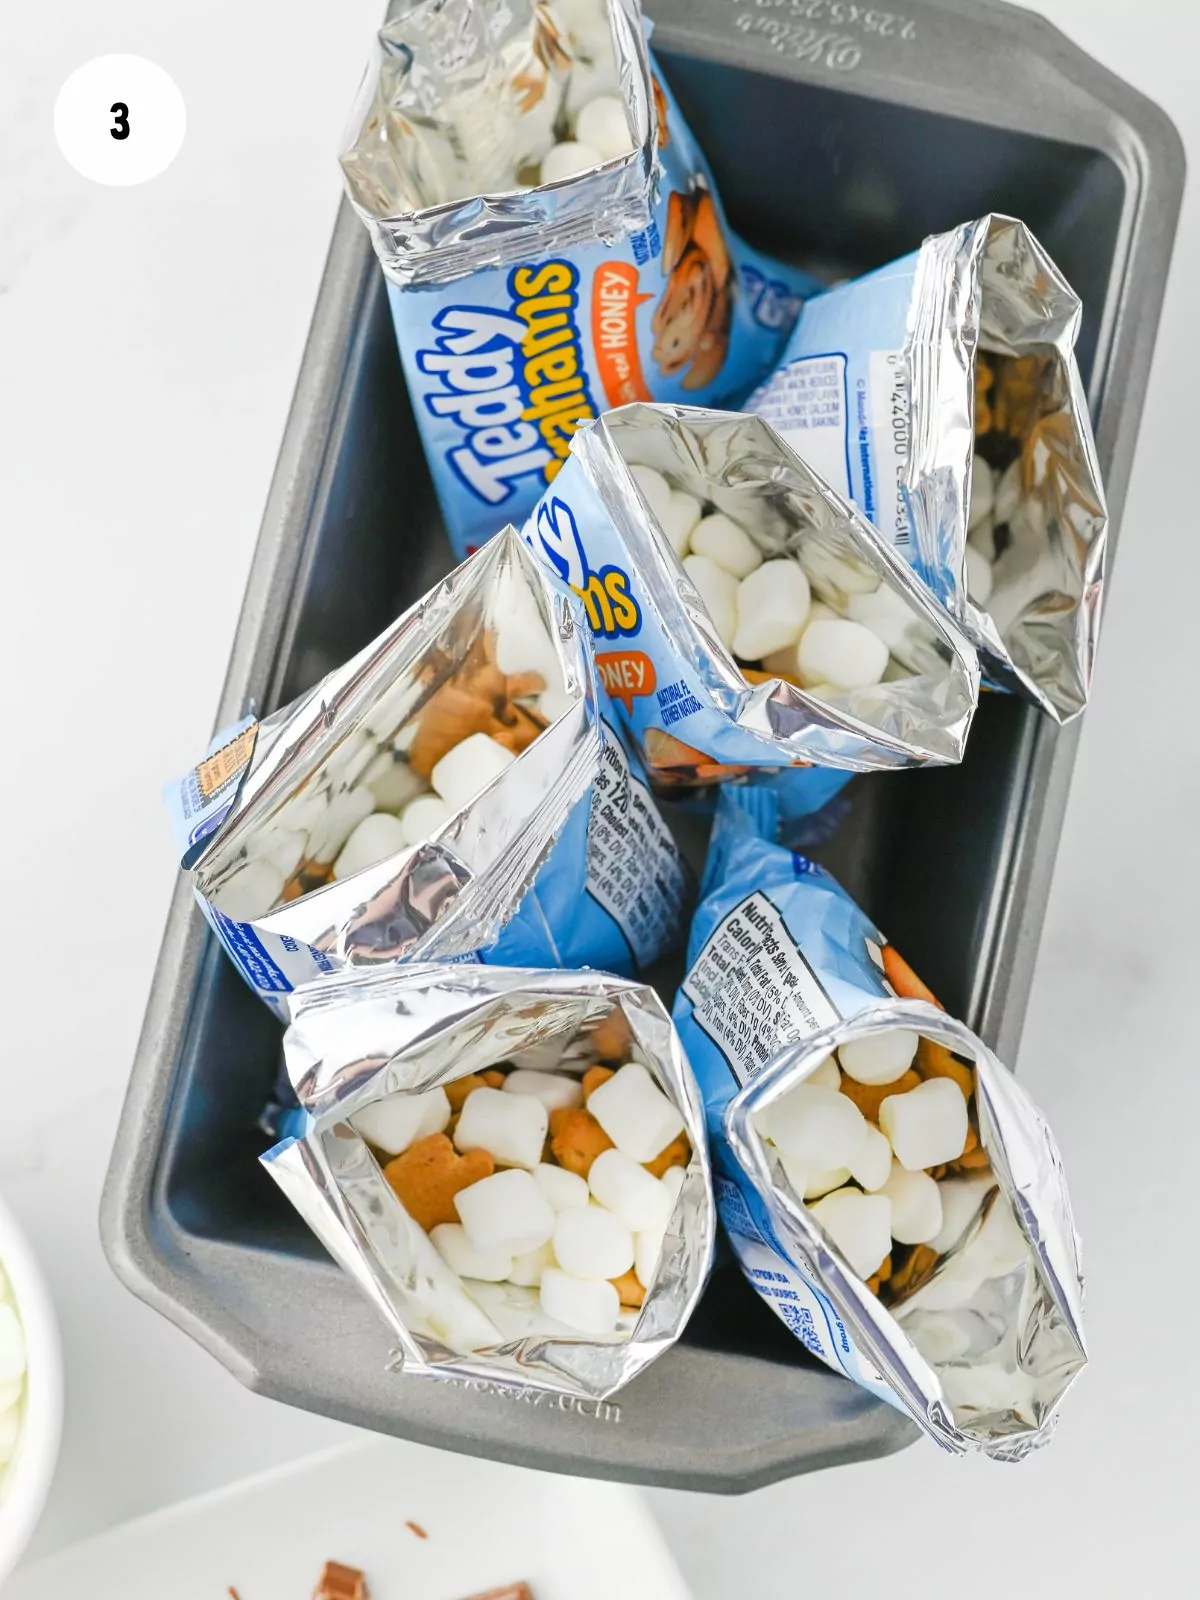 Add mini marshmallows to the bags